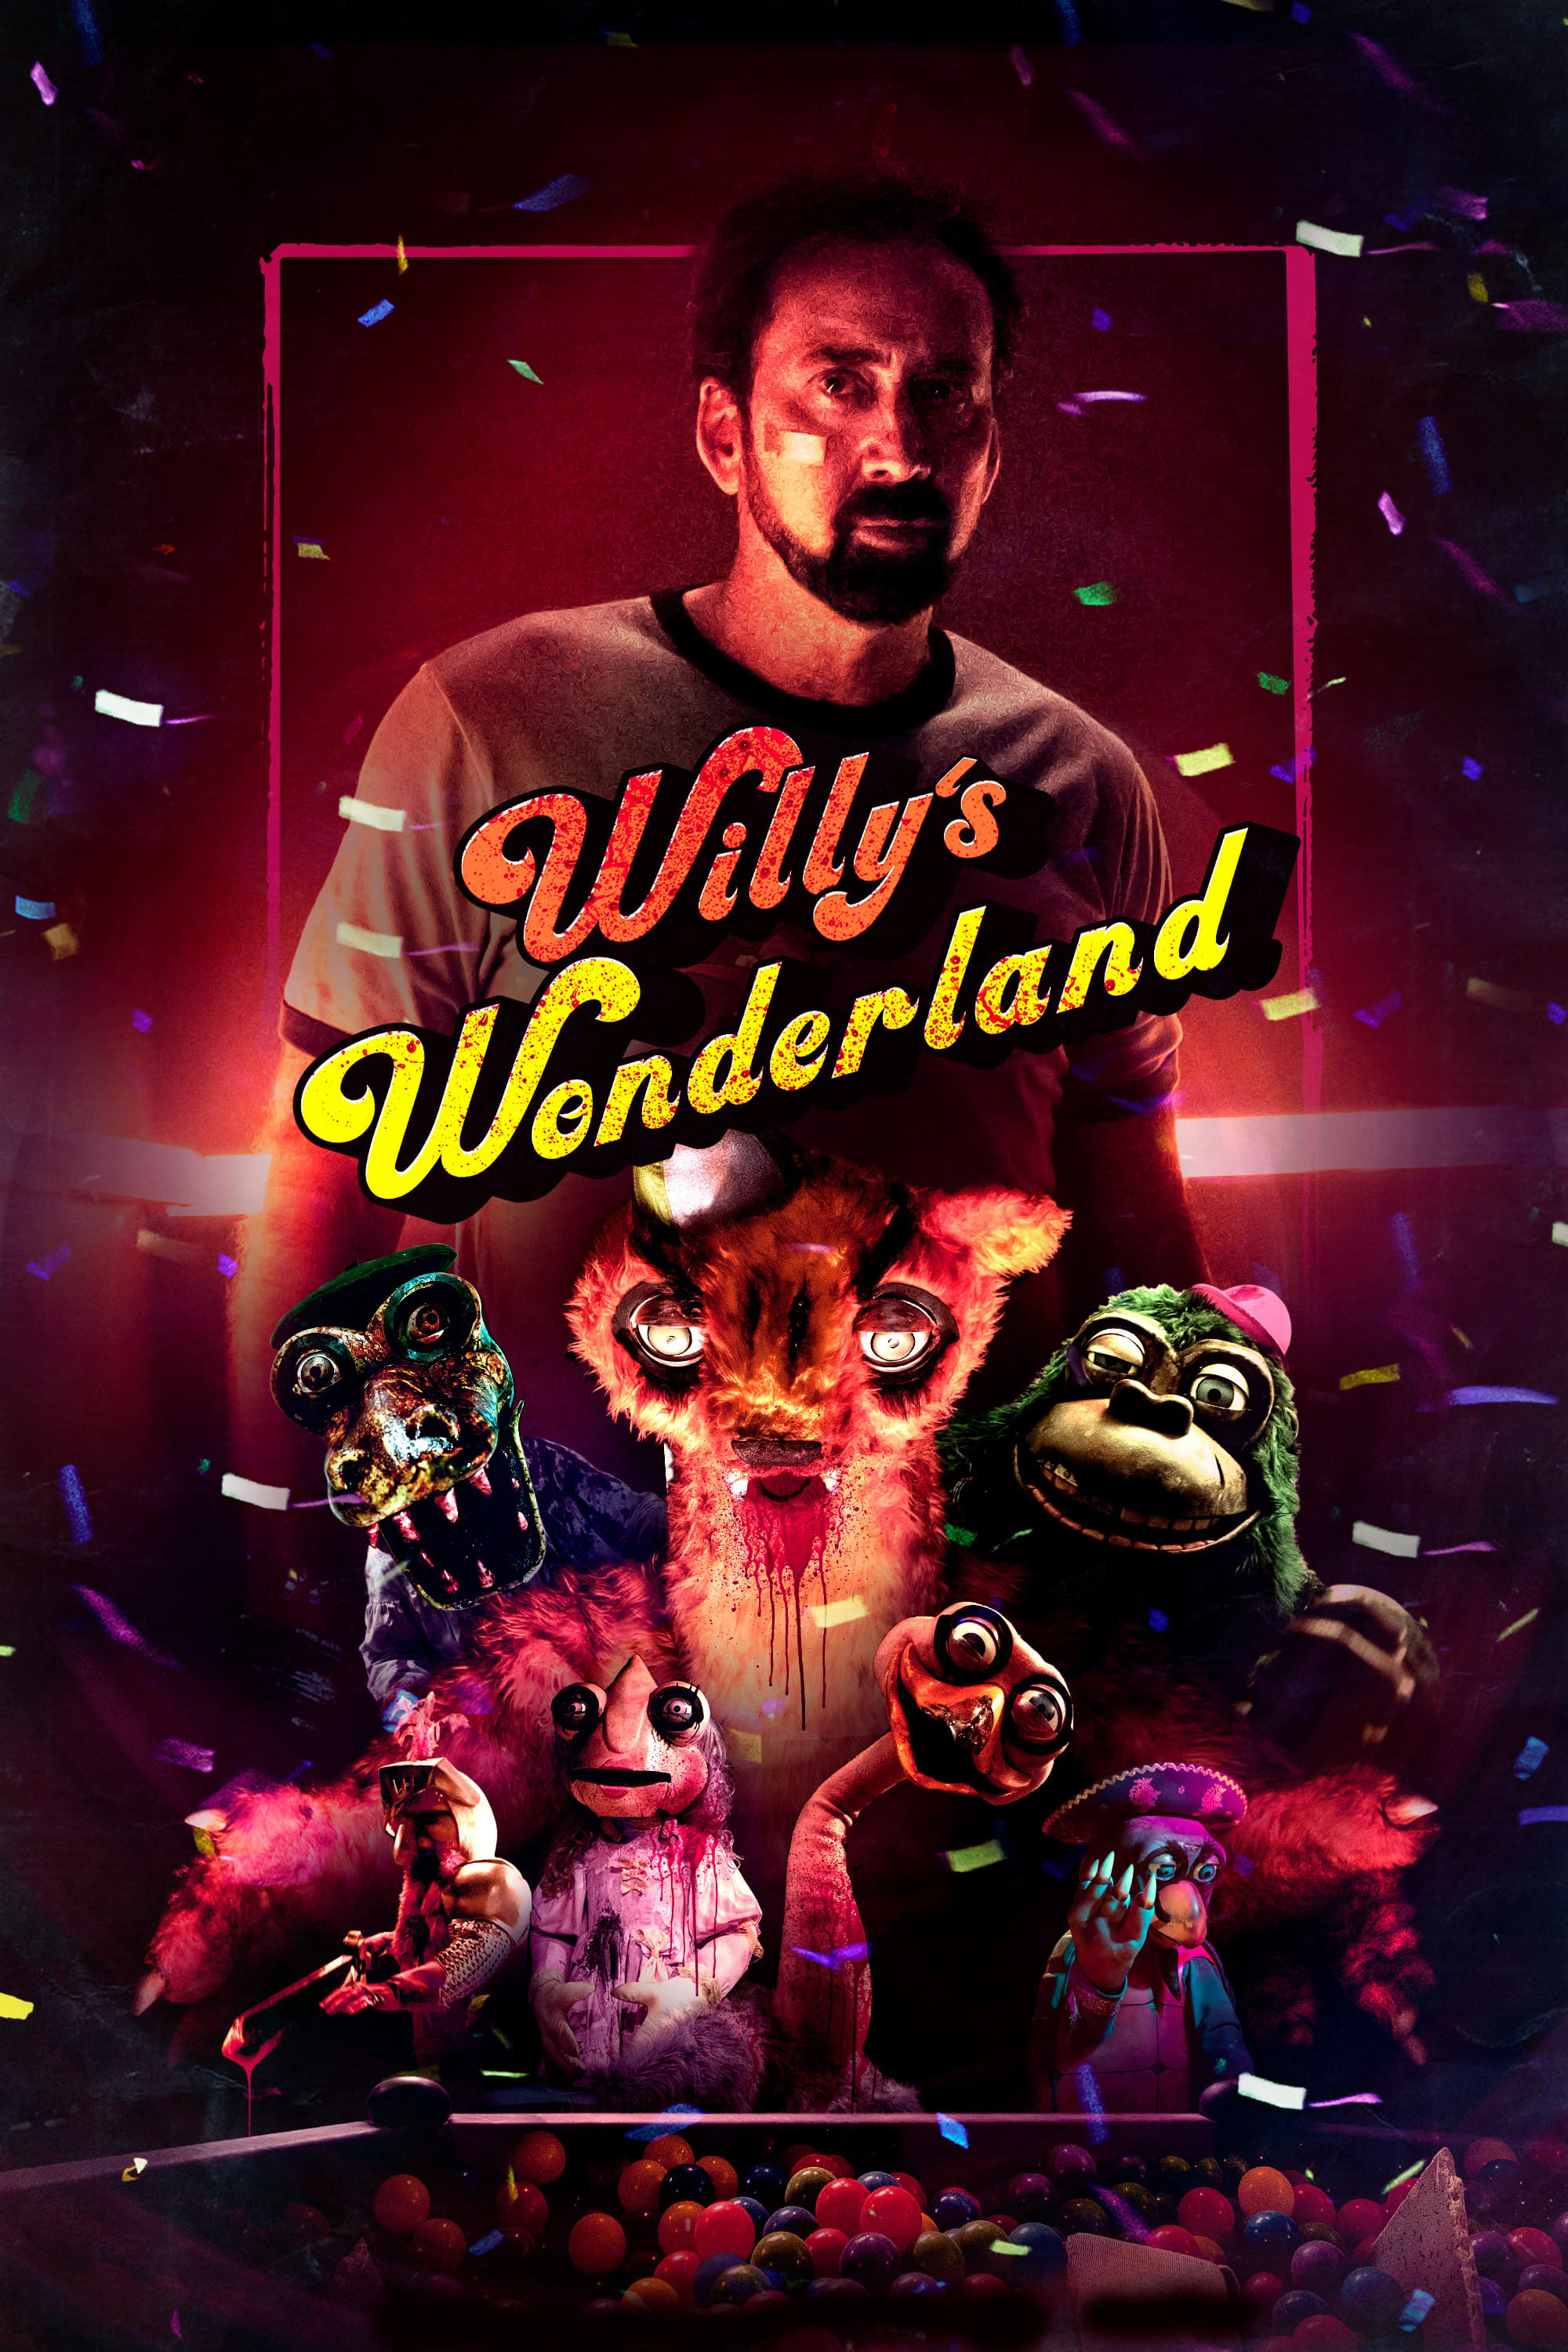 Wally's Wonderland